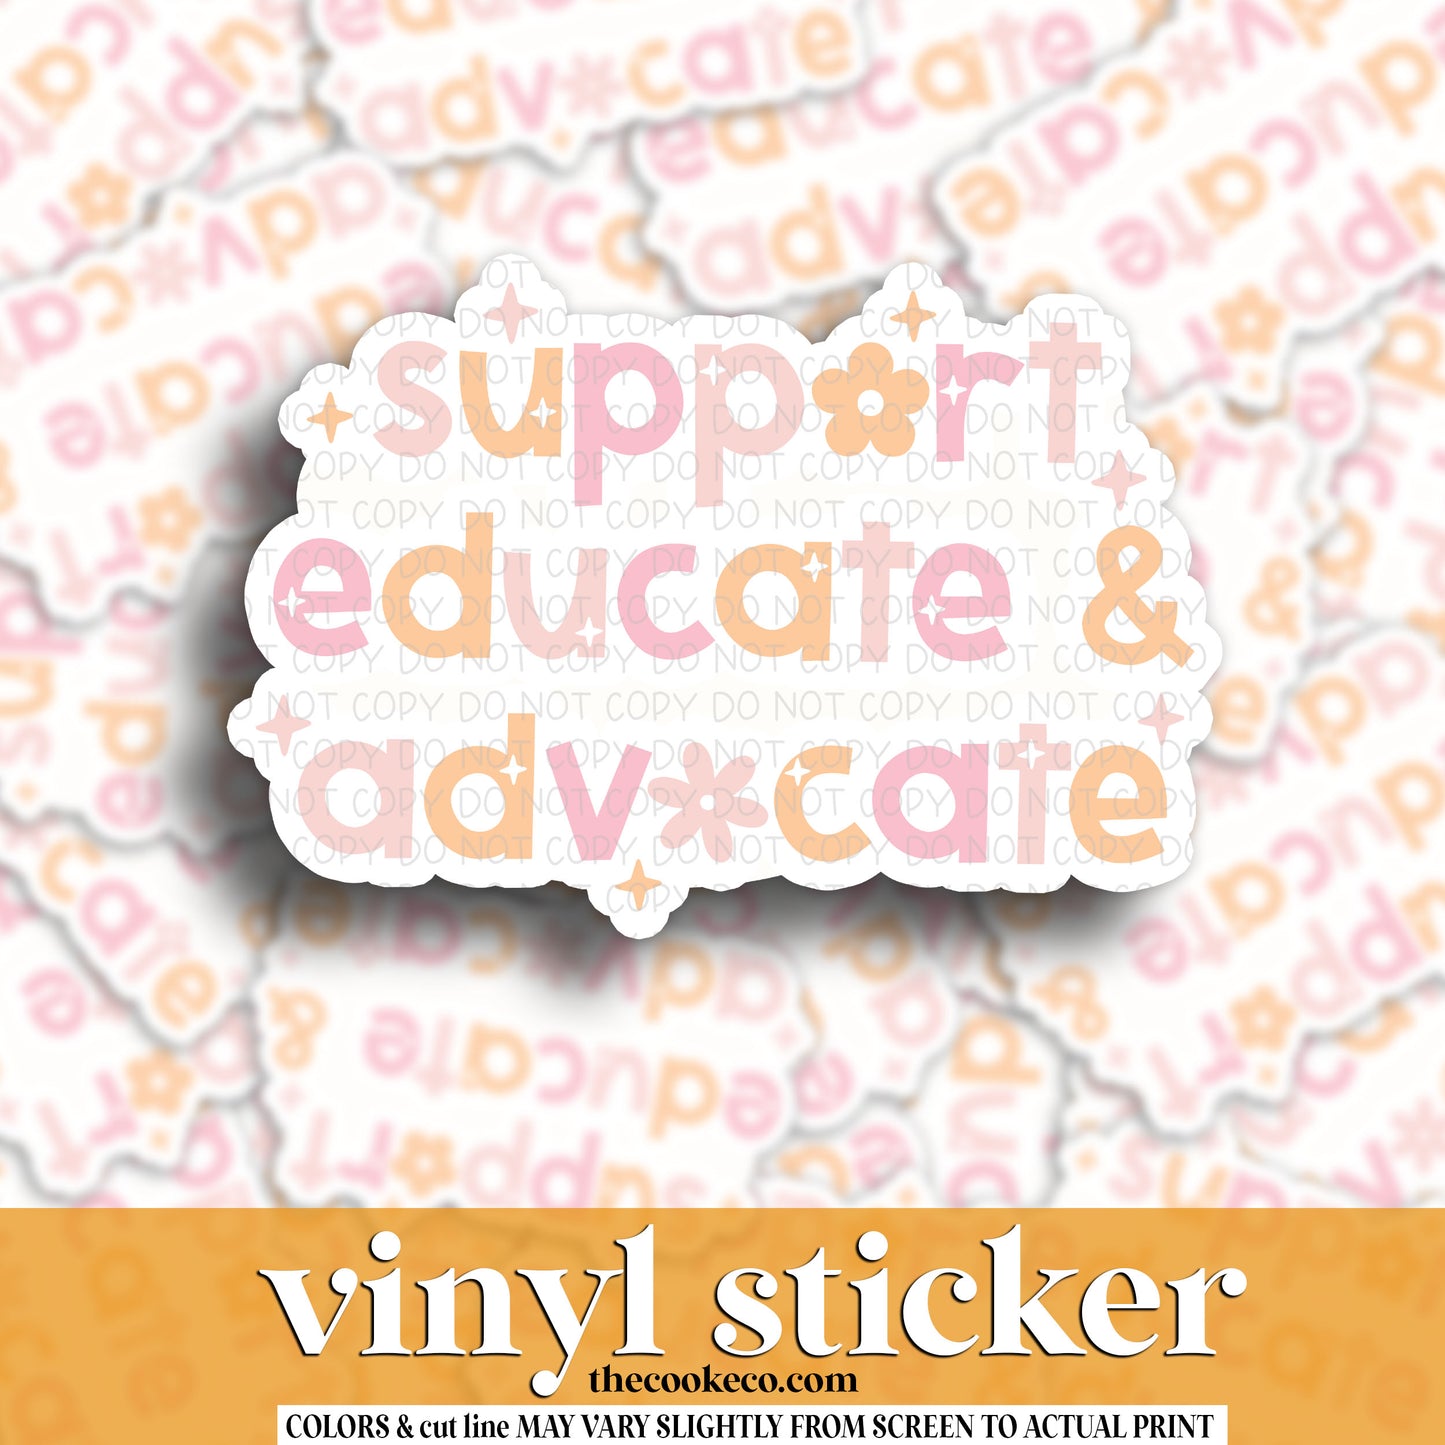 Vinyl Sticker | #V1559 -  SUPPORT, EDUCATE & ADVOCATE